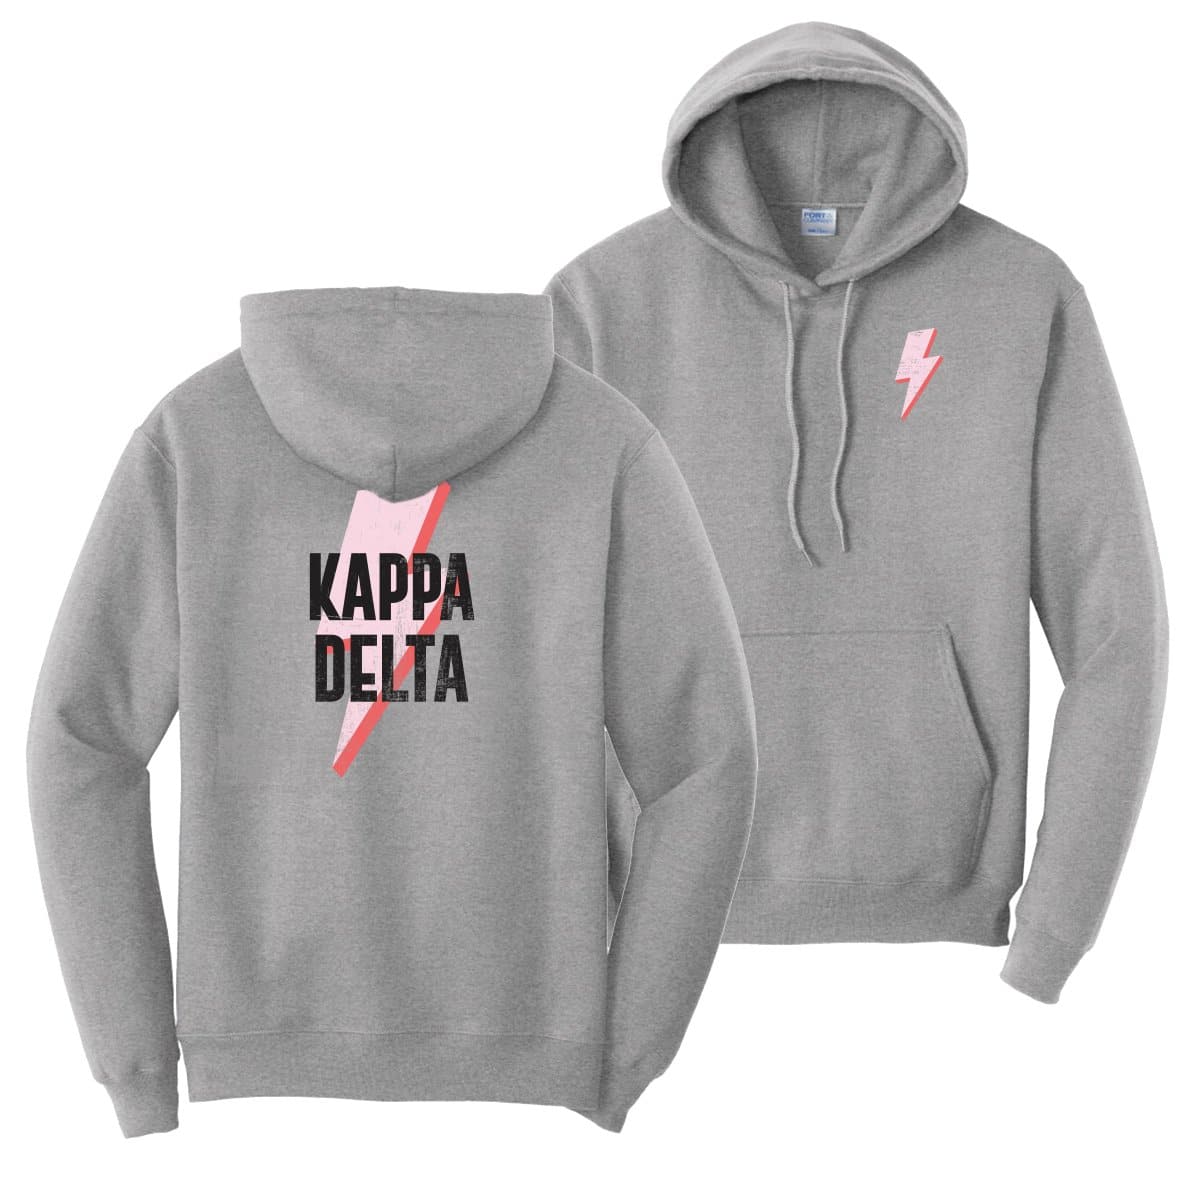 New! Kappa Delta Lightning Bolt Hoodie | Kappa Delta | Sweatshirts > Hooded sweatshirts